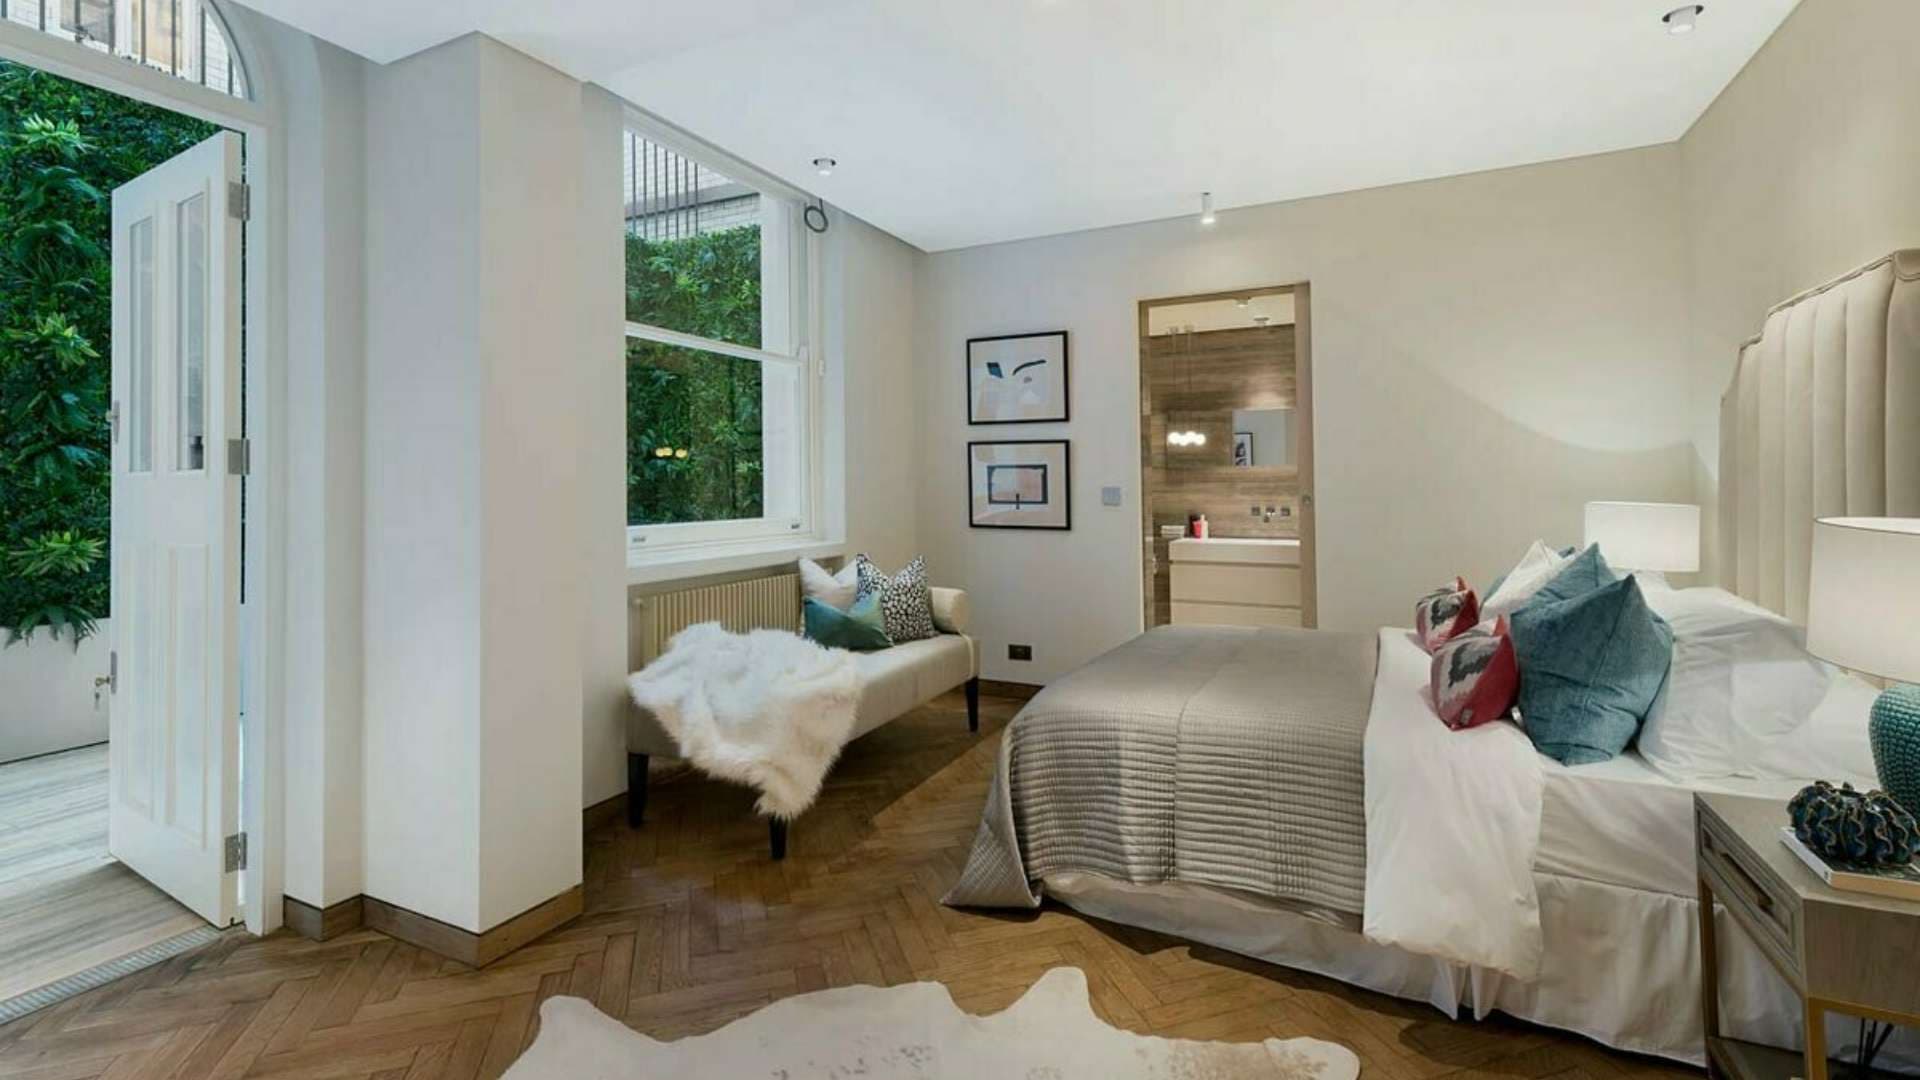 5 Bedroom Apartment For Sale Cadogan Square London Lp10416 1ebf257cfbb1bc0.jpg